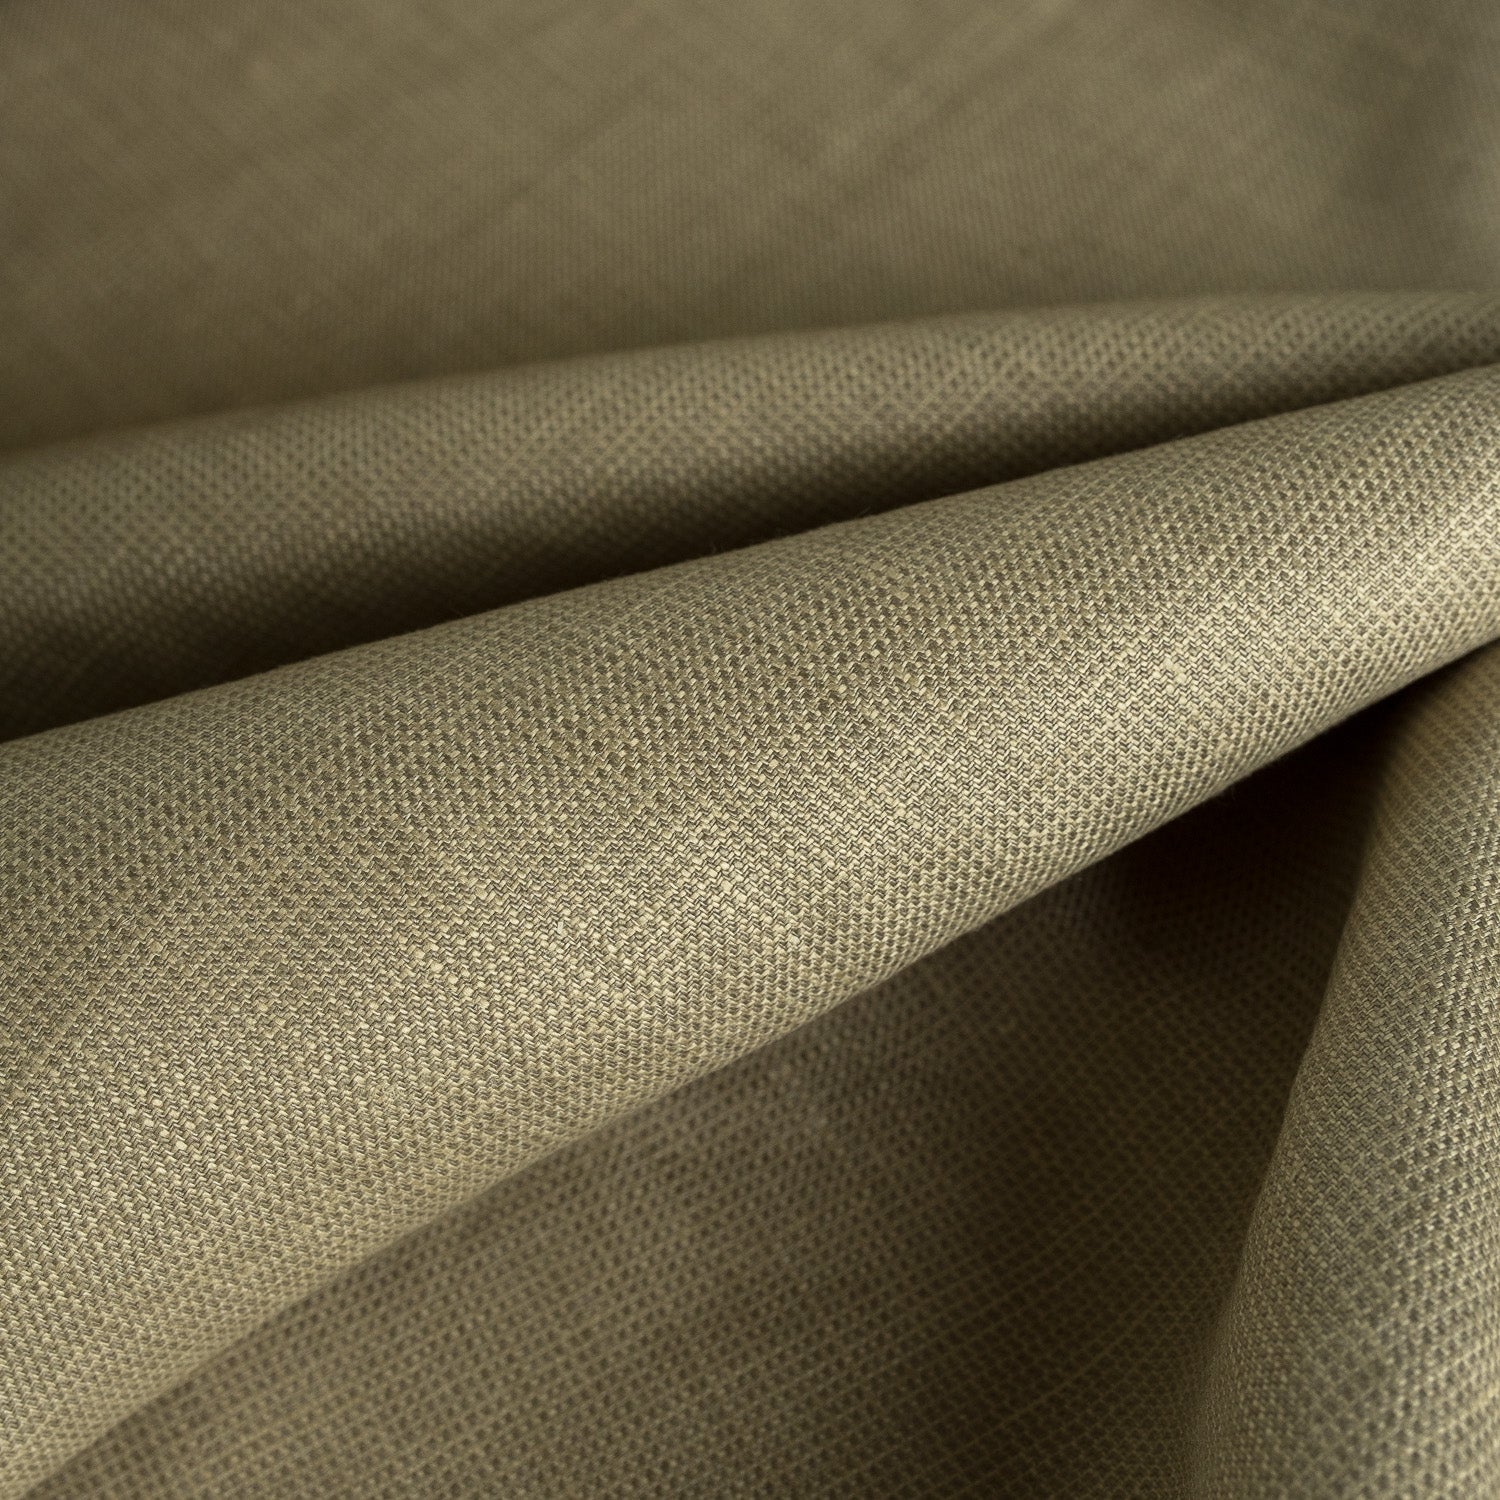 Pale Green Twill 100% Linen Fabric